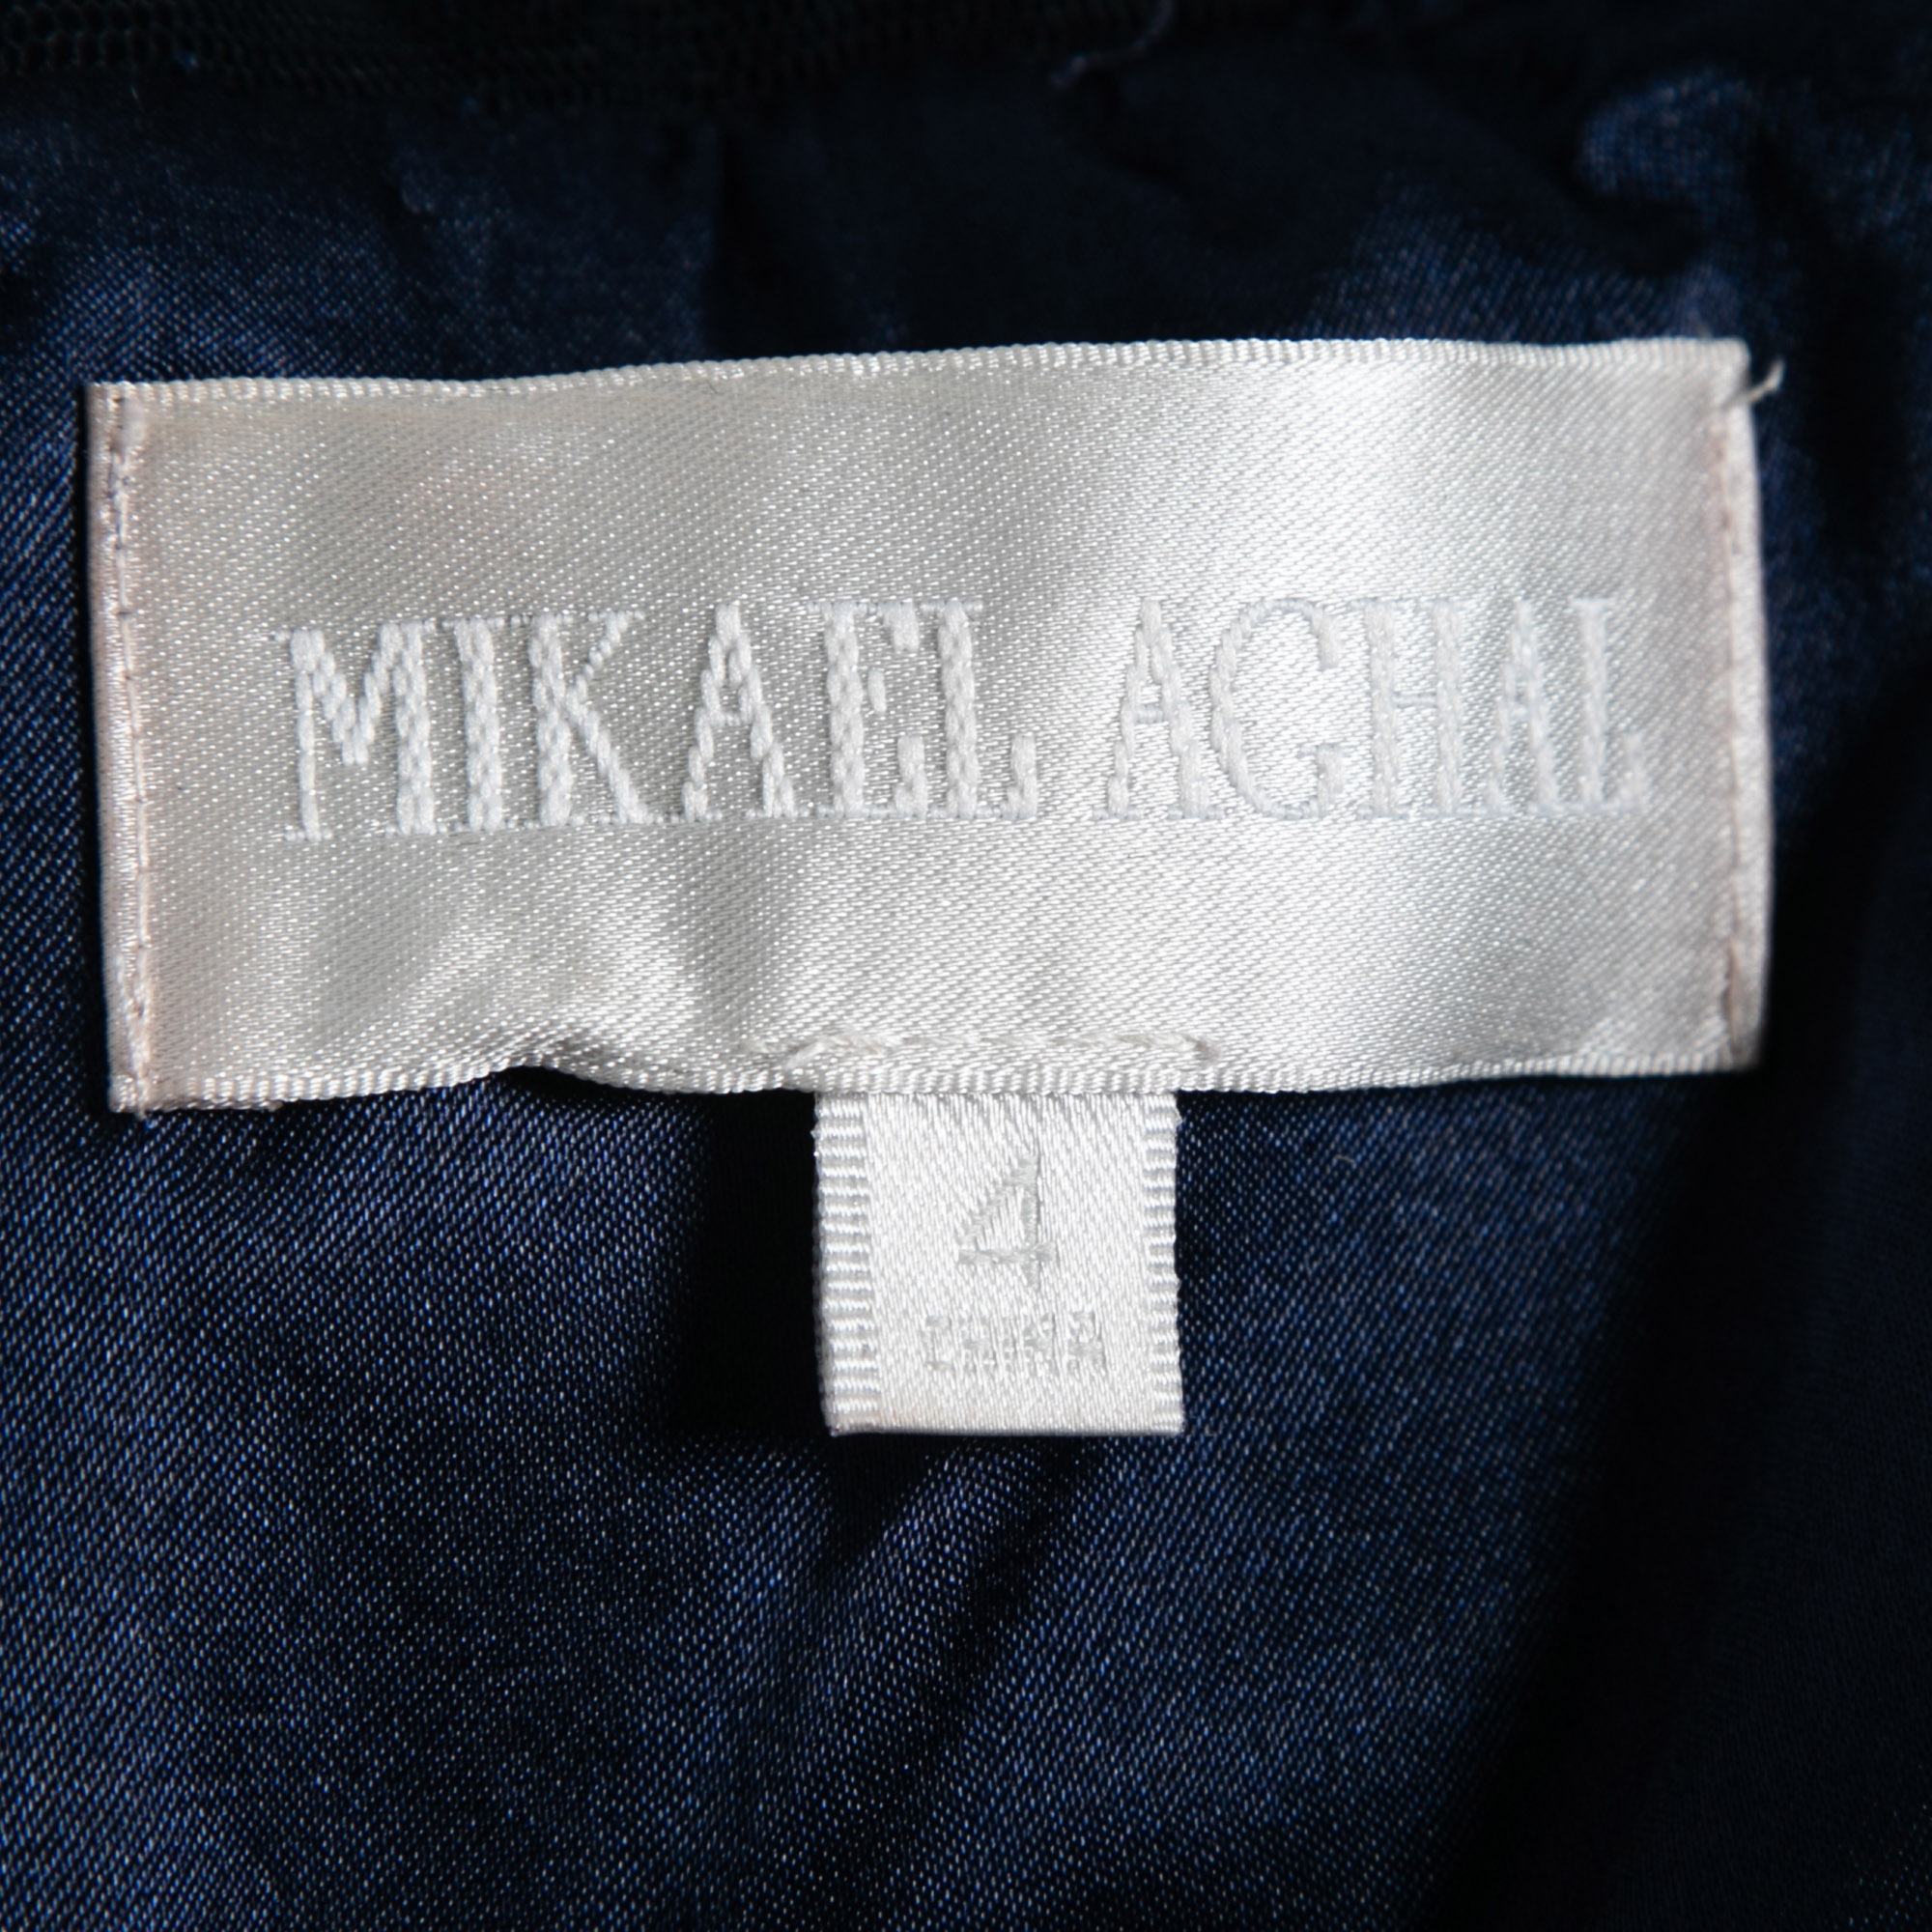 Mikael Aghal Navy Blue Rosette Applique Embellished Sheer Yoke Sleeveless Dress S